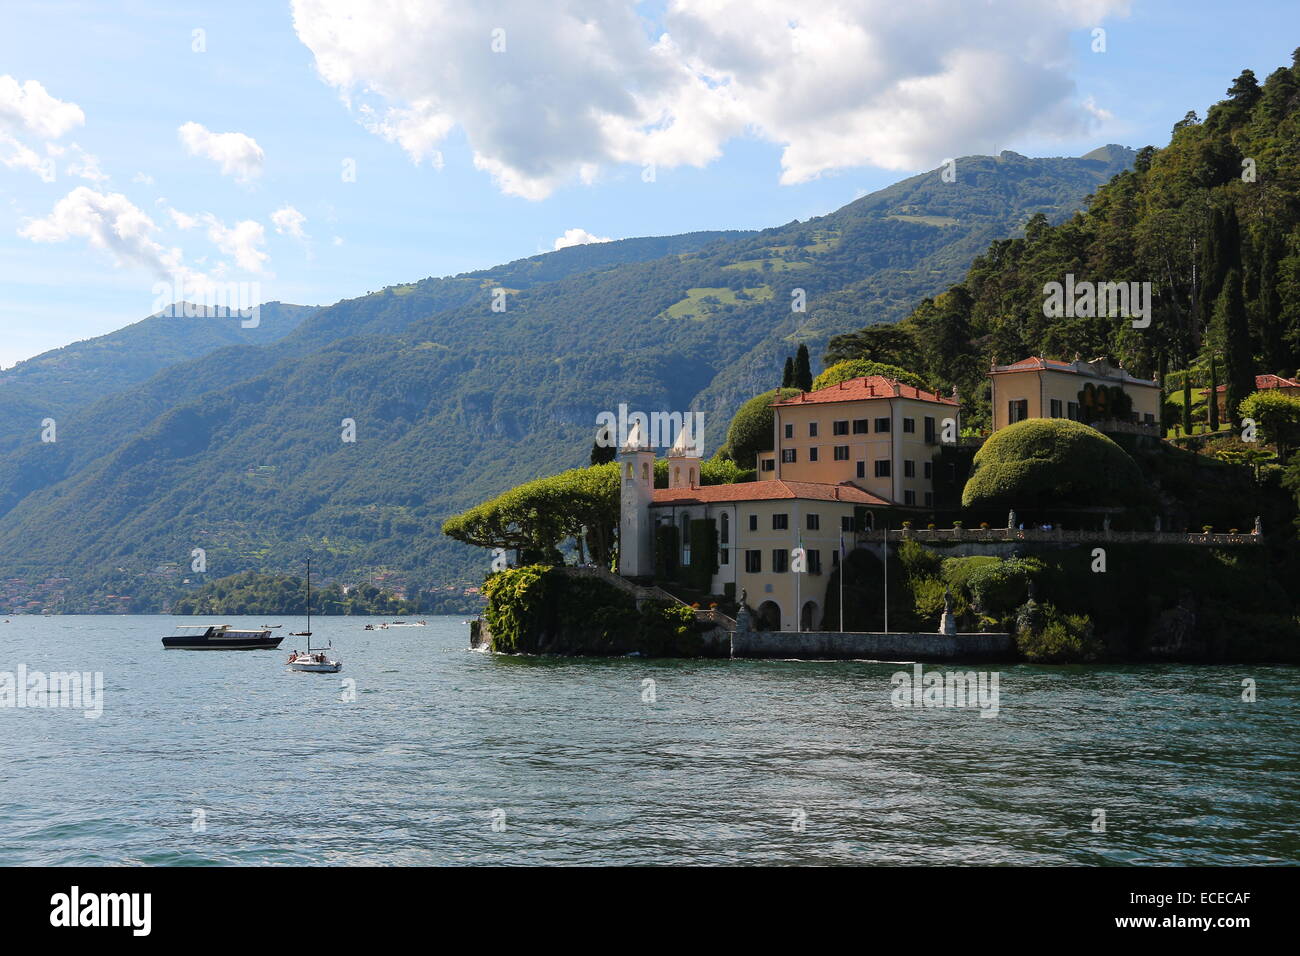 Italy, Villa del Balbianello, View of building with mountain range on background Stock Photo